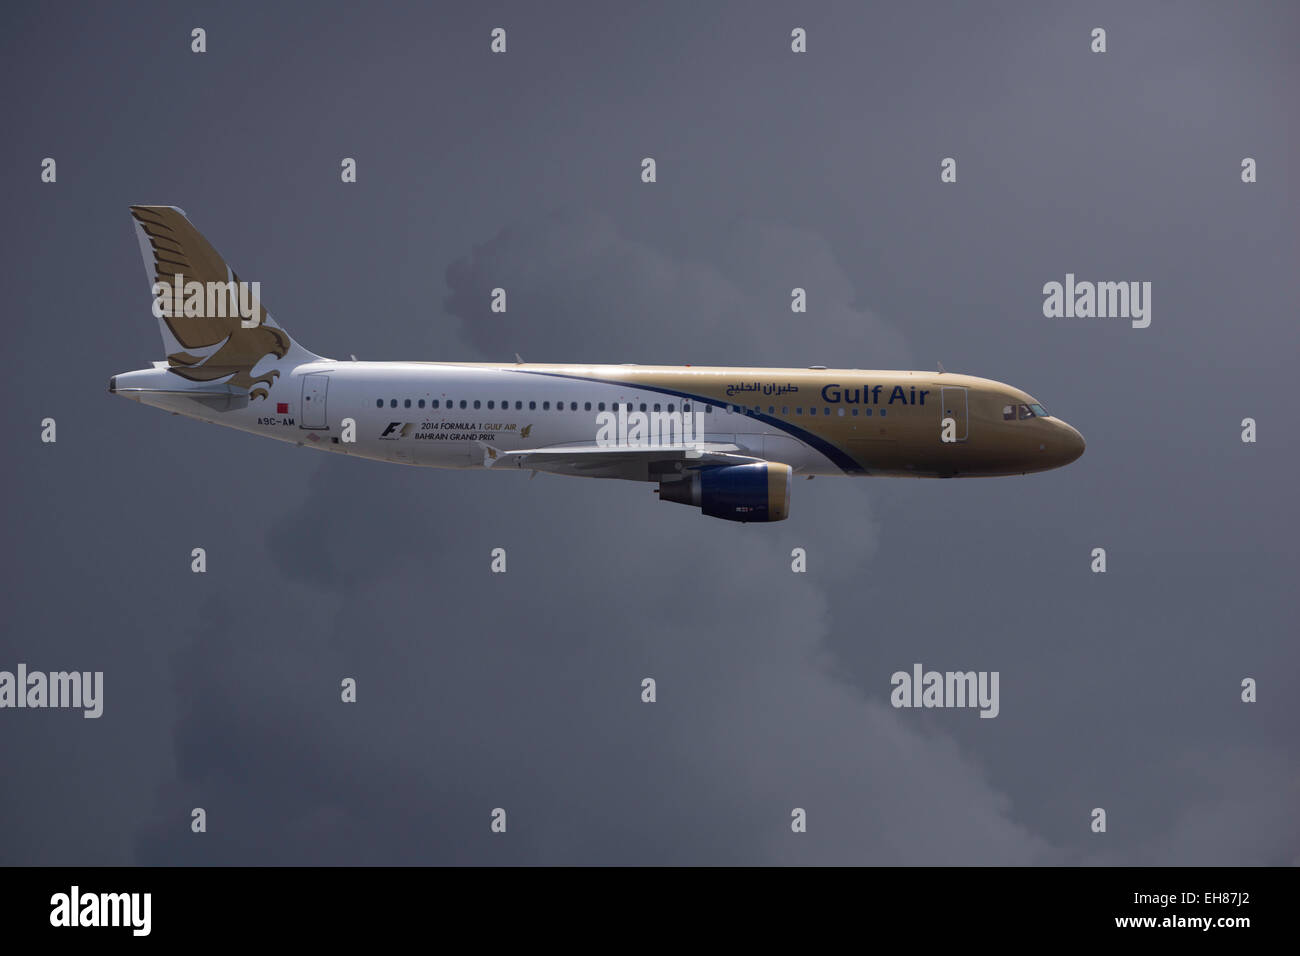 A9C-AM Gulf Air Airbus A320-214 en vuelo Foto de stock